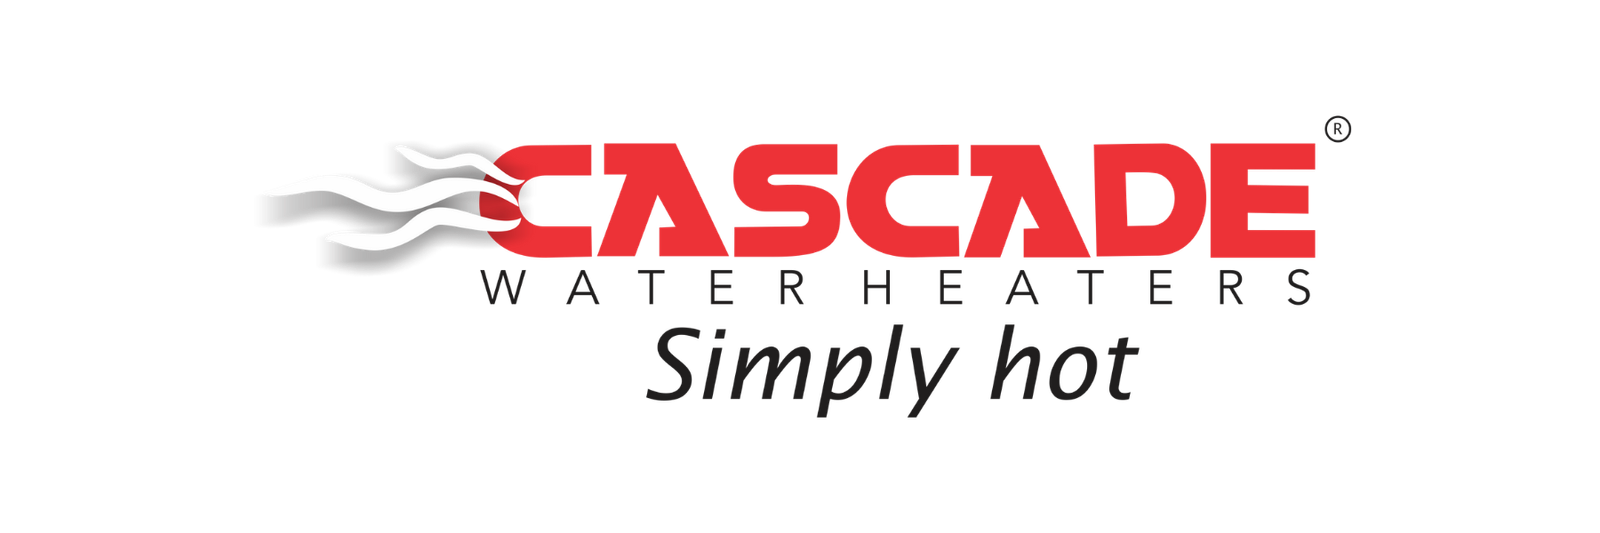 Official cascade logo for mobile landscape